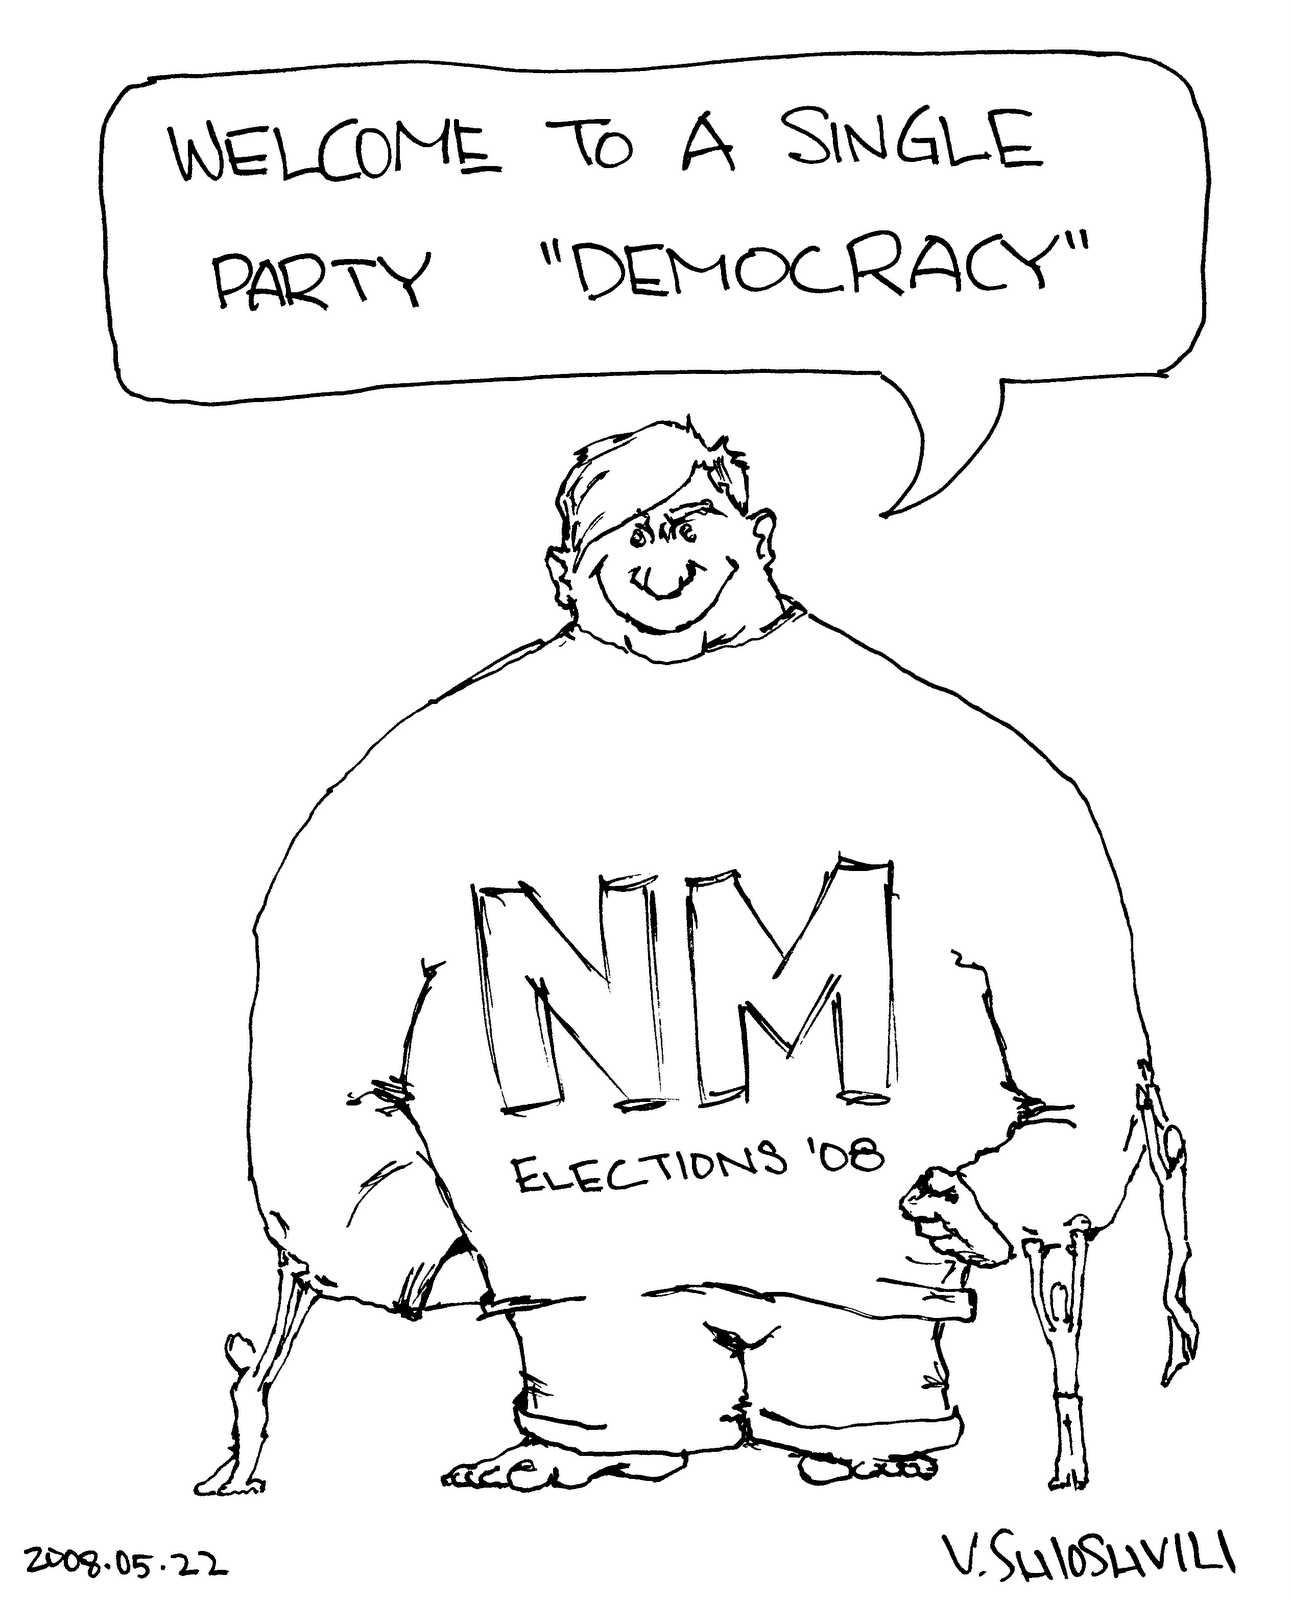 [single-party-democracy.gif]